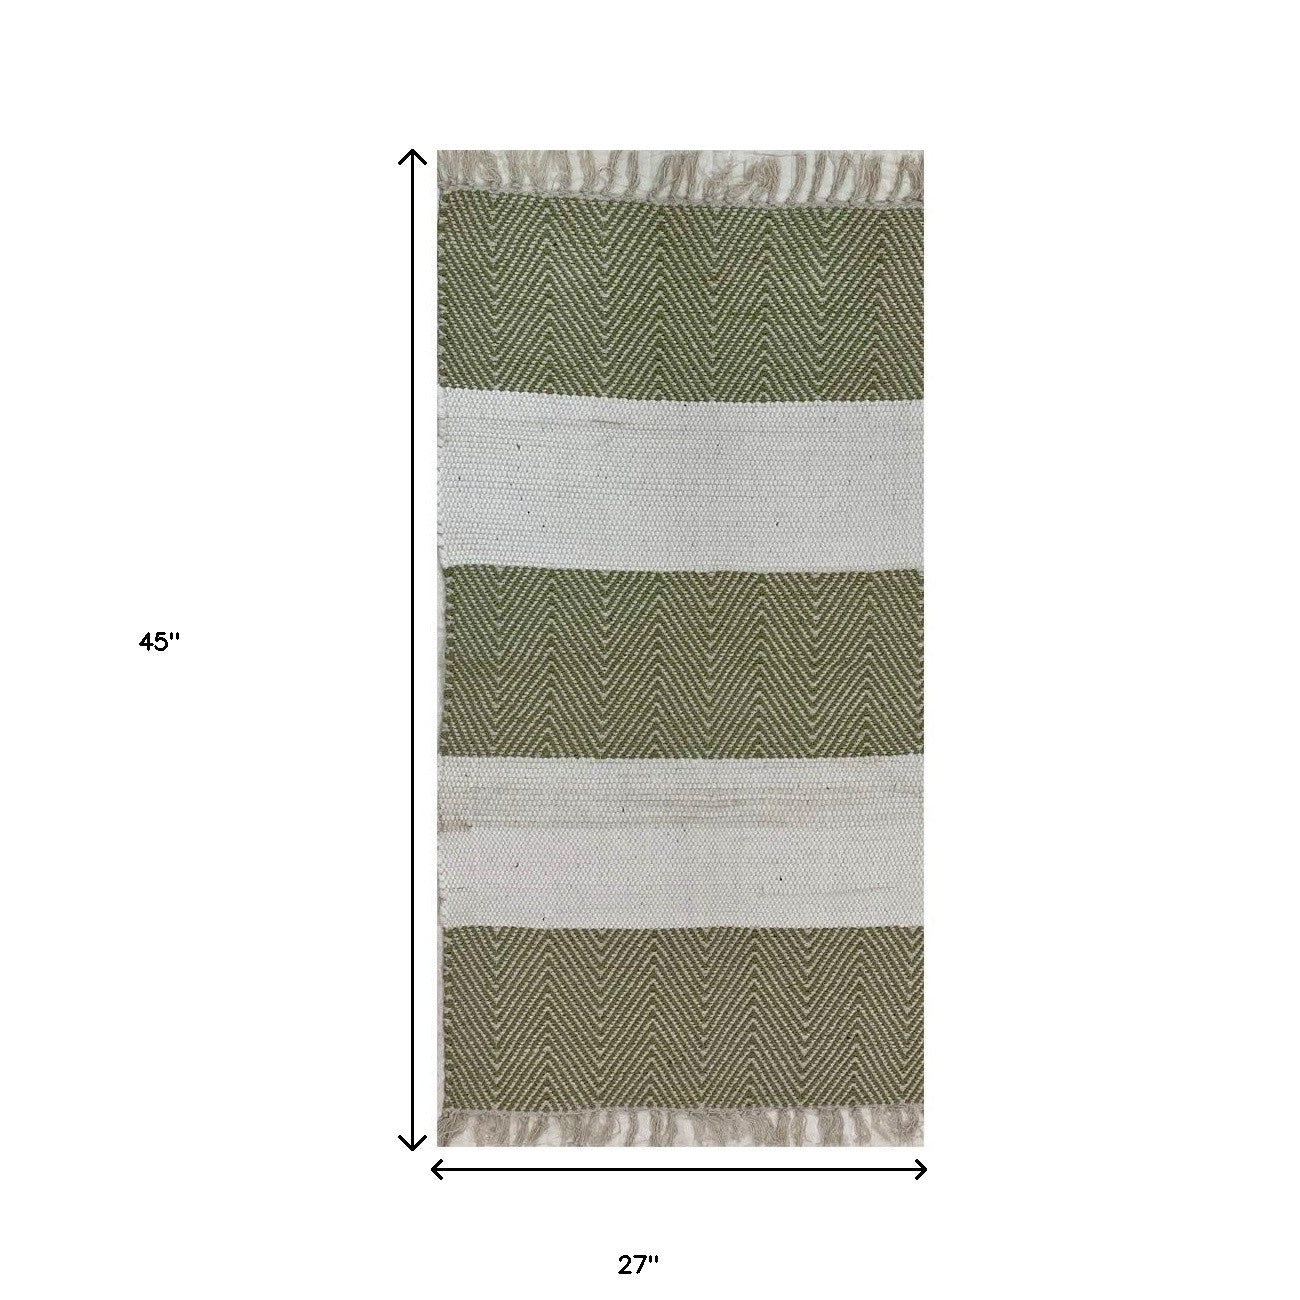 2’ x 4’ Green and White Chevron Striped Area Rug